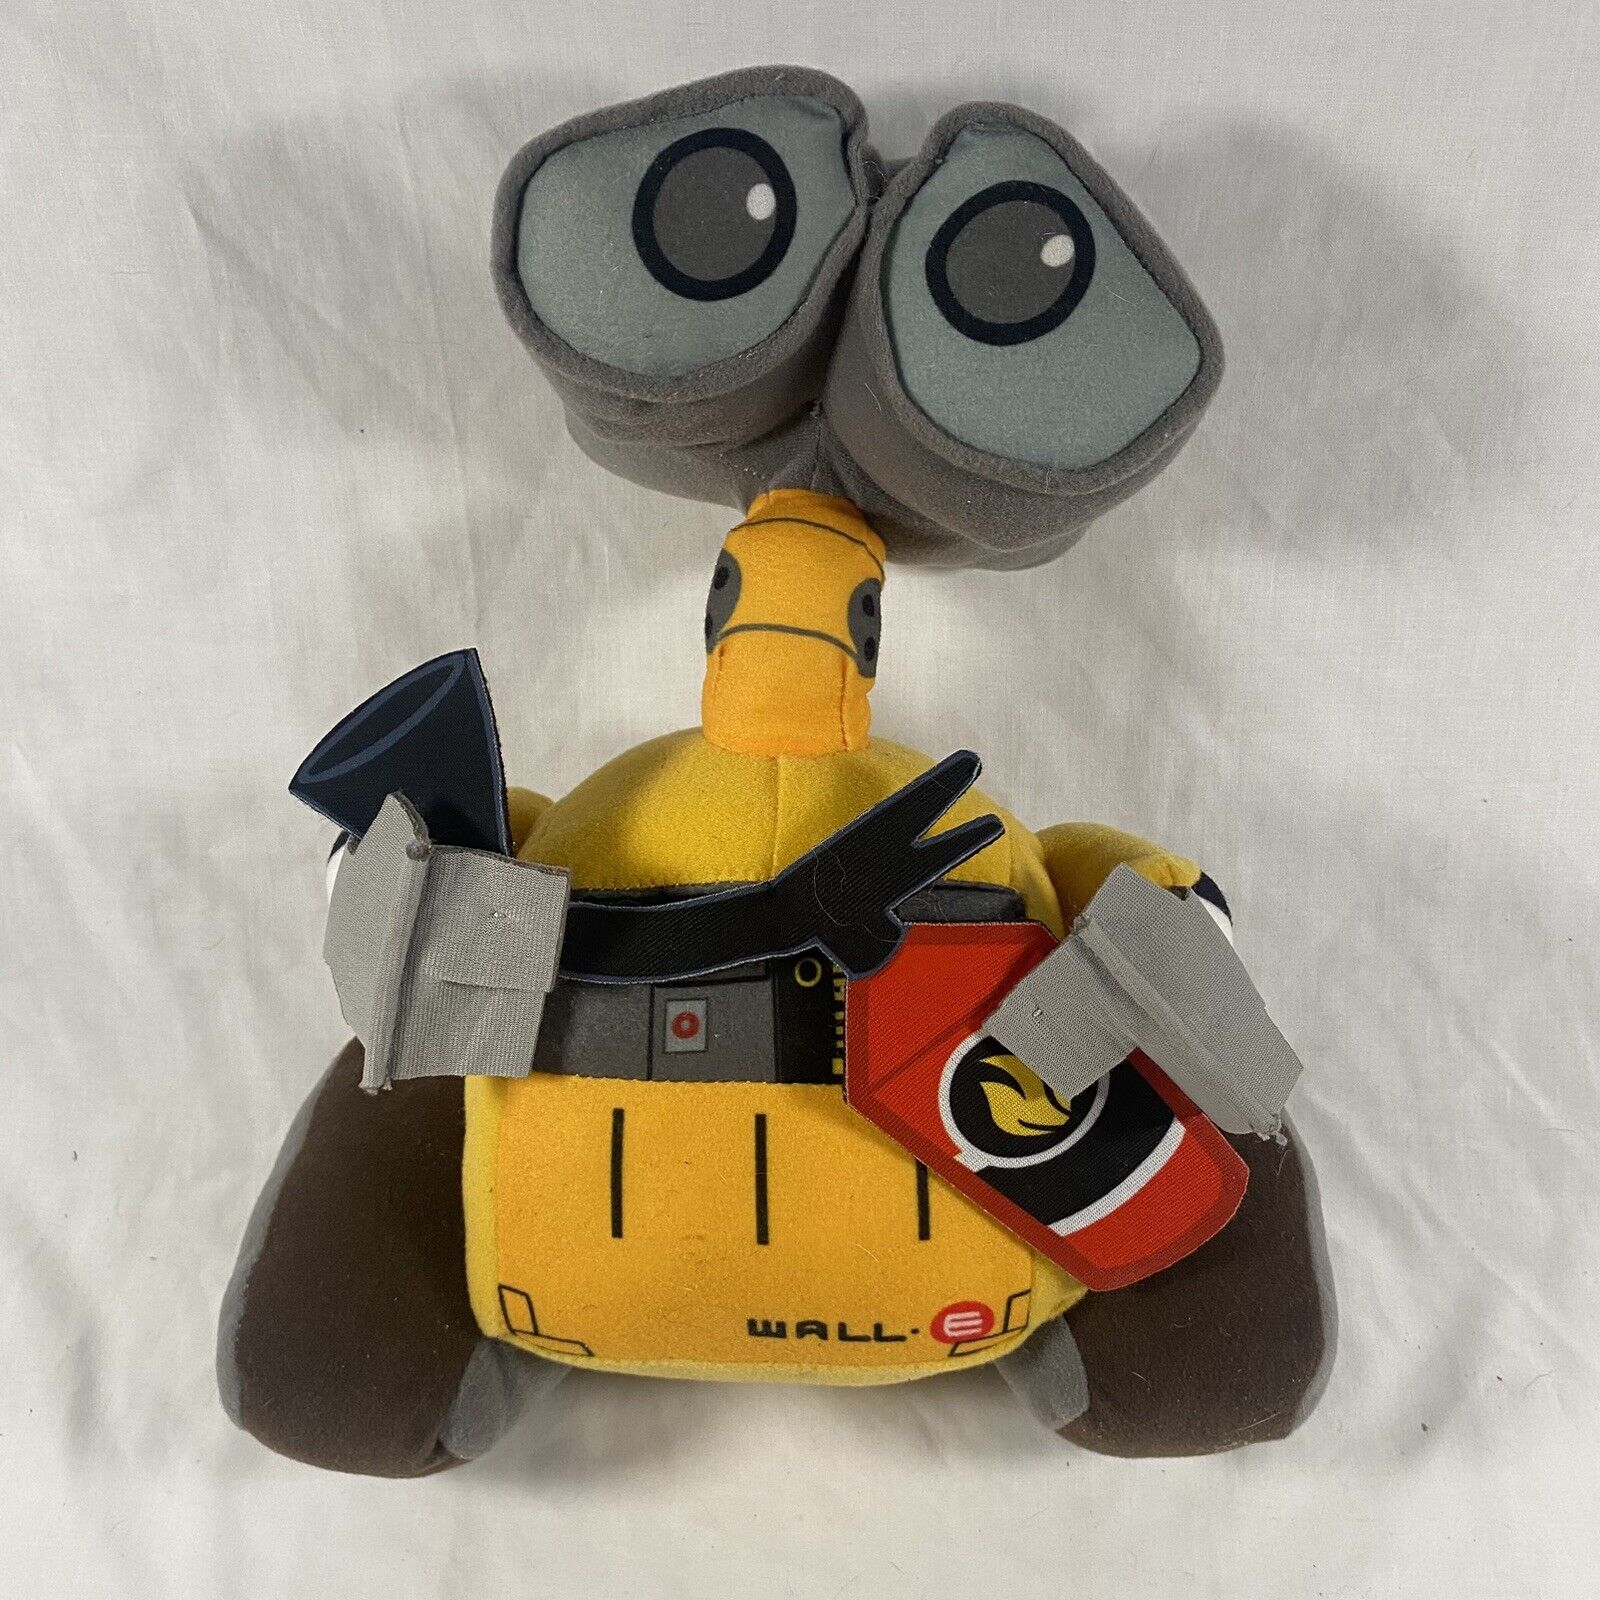 Disney Store Pixar 12”Yellow WALL-E Plush Stuffed Animal Robot Toy Doll